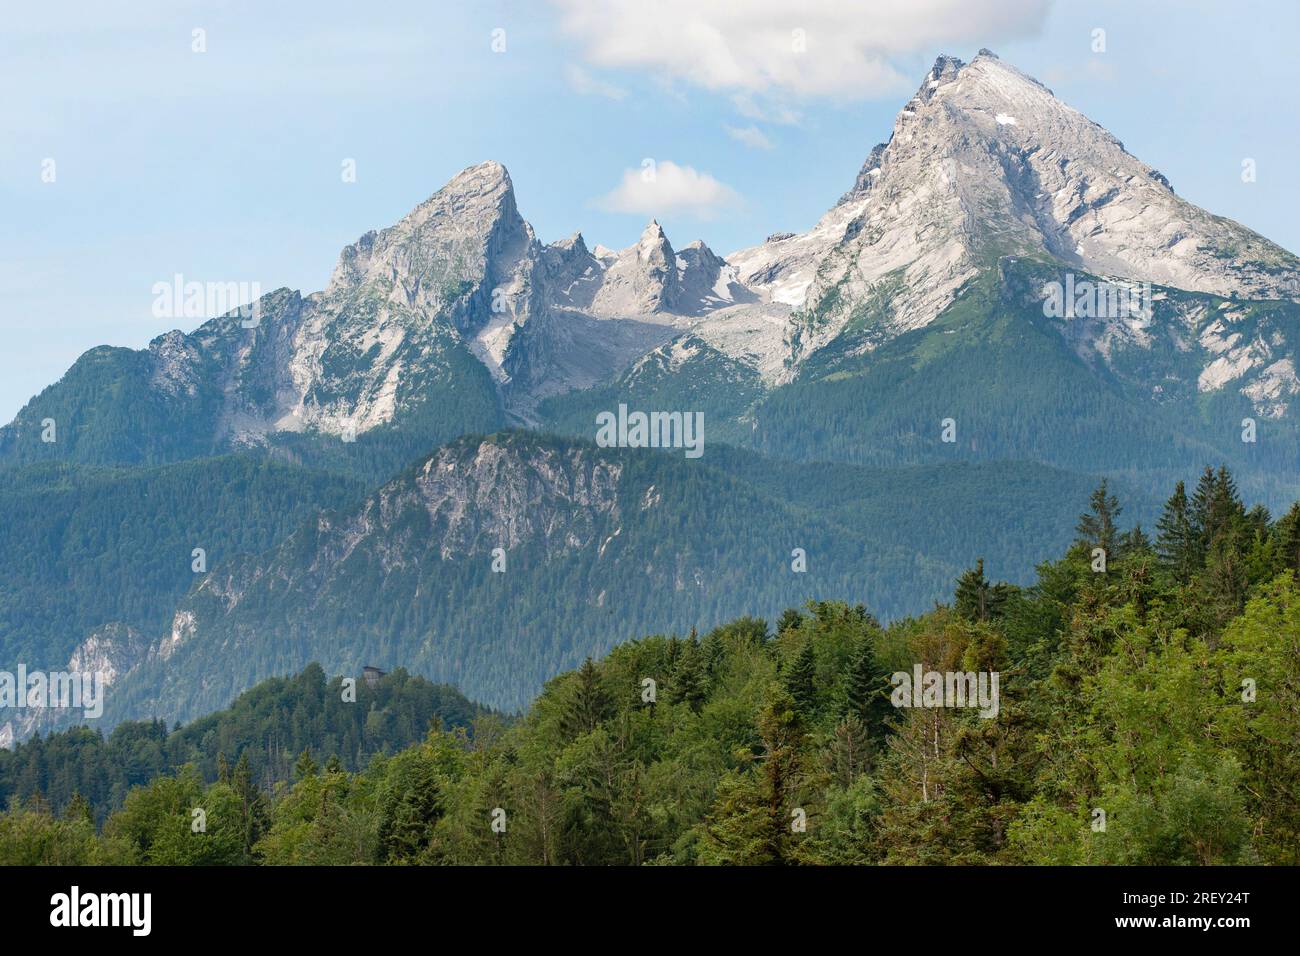 Watzmann mountain in Berchtesgaden, summer season, Upper Bavaria, Germany Stock Photo